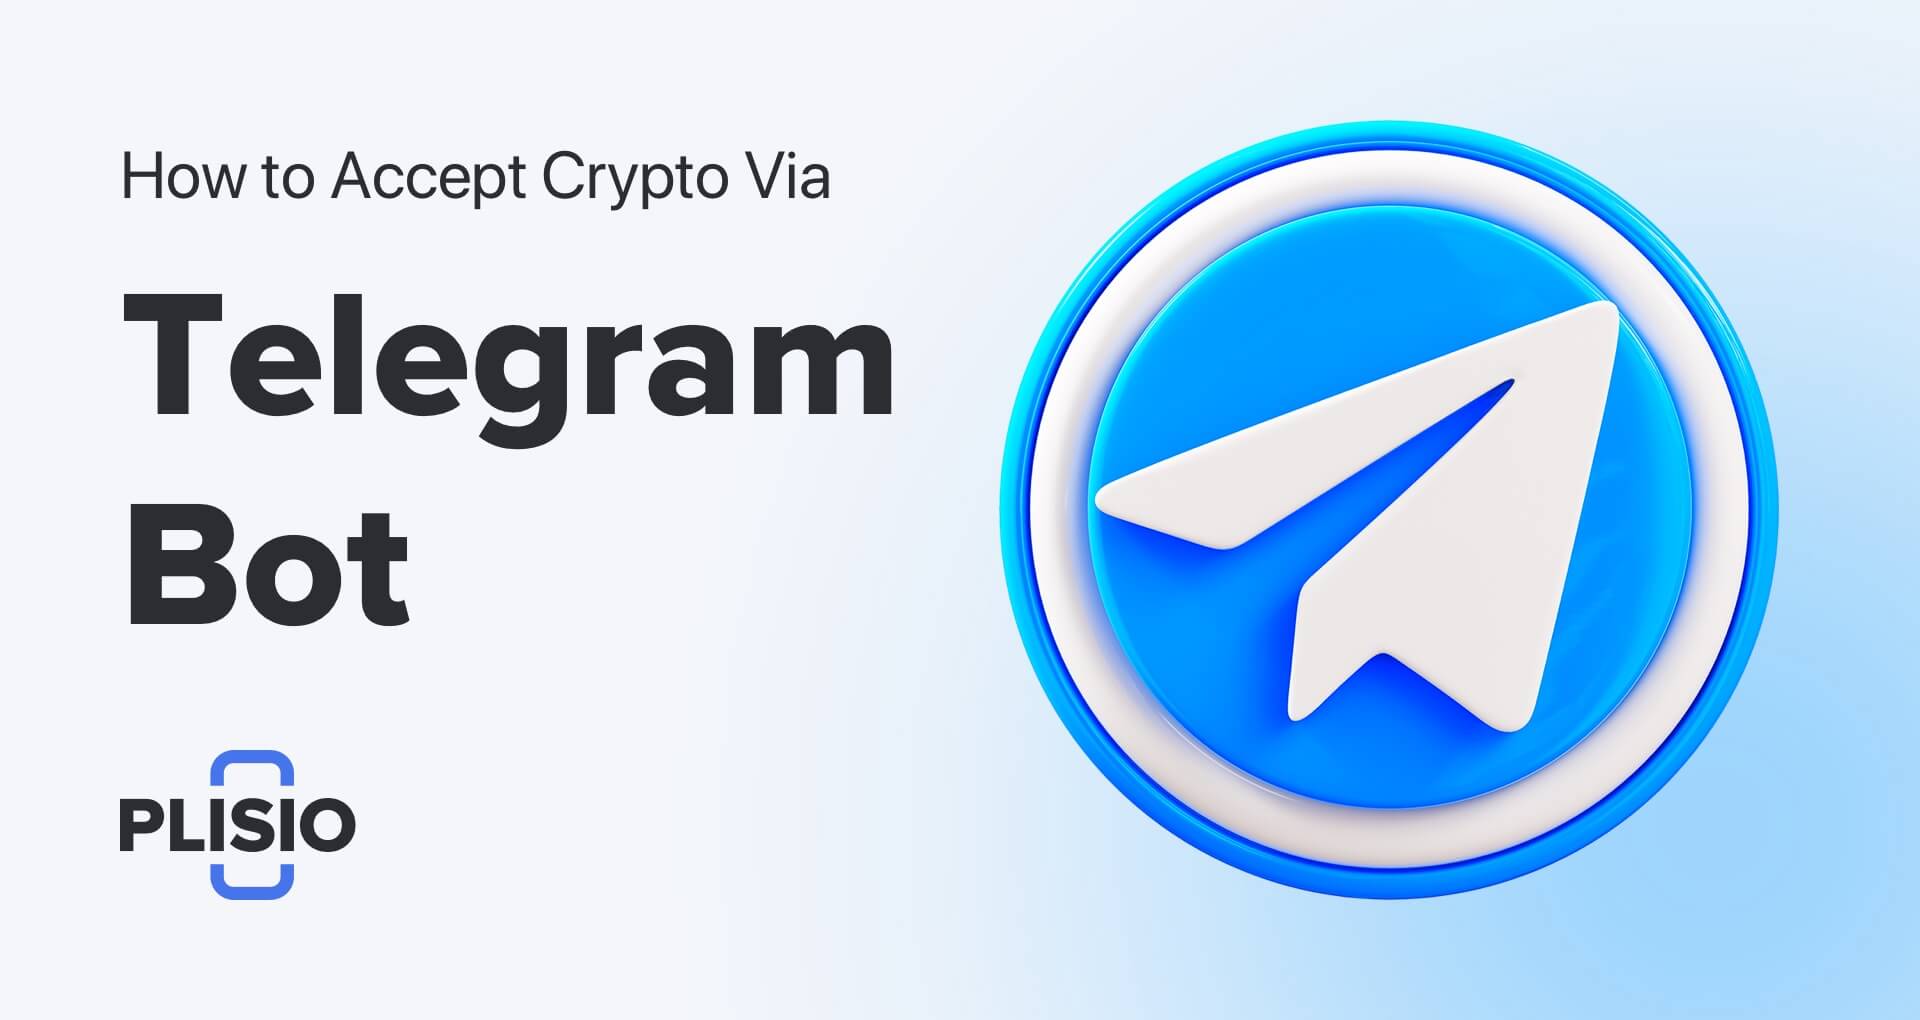 Telegram ボット経由で暗号通貨を簡単に受け入れる方法